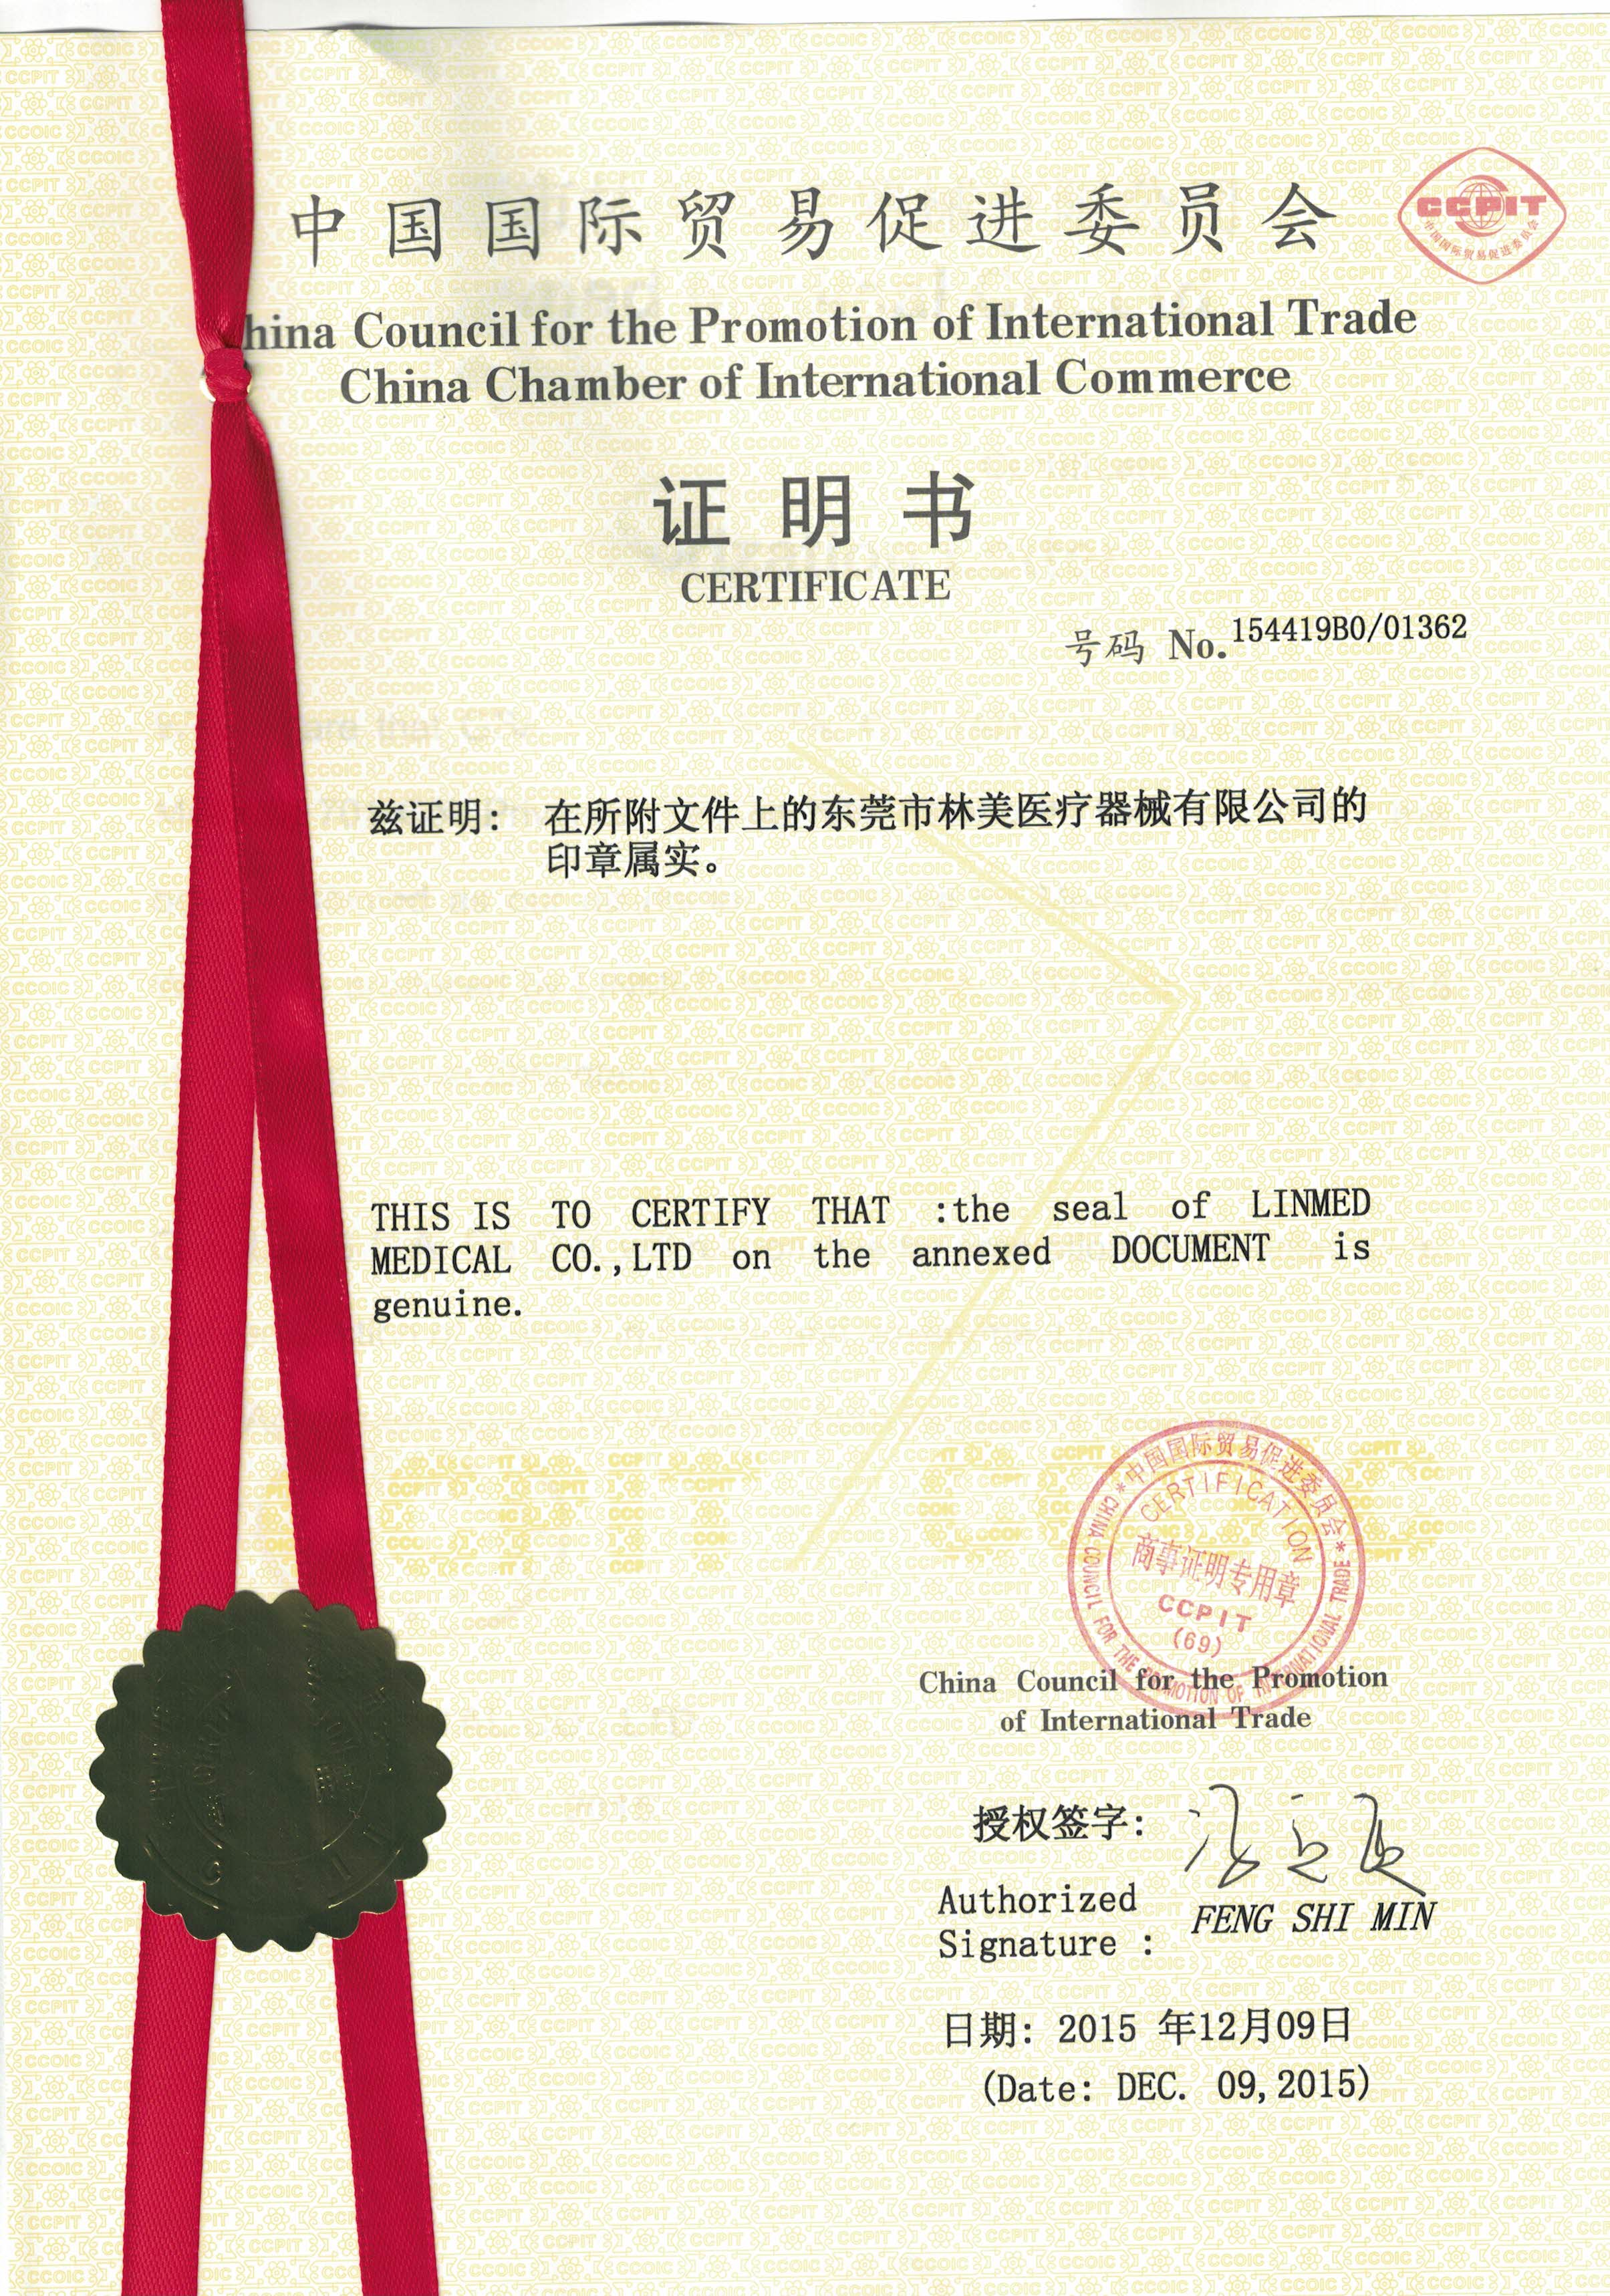 ccpit certificate